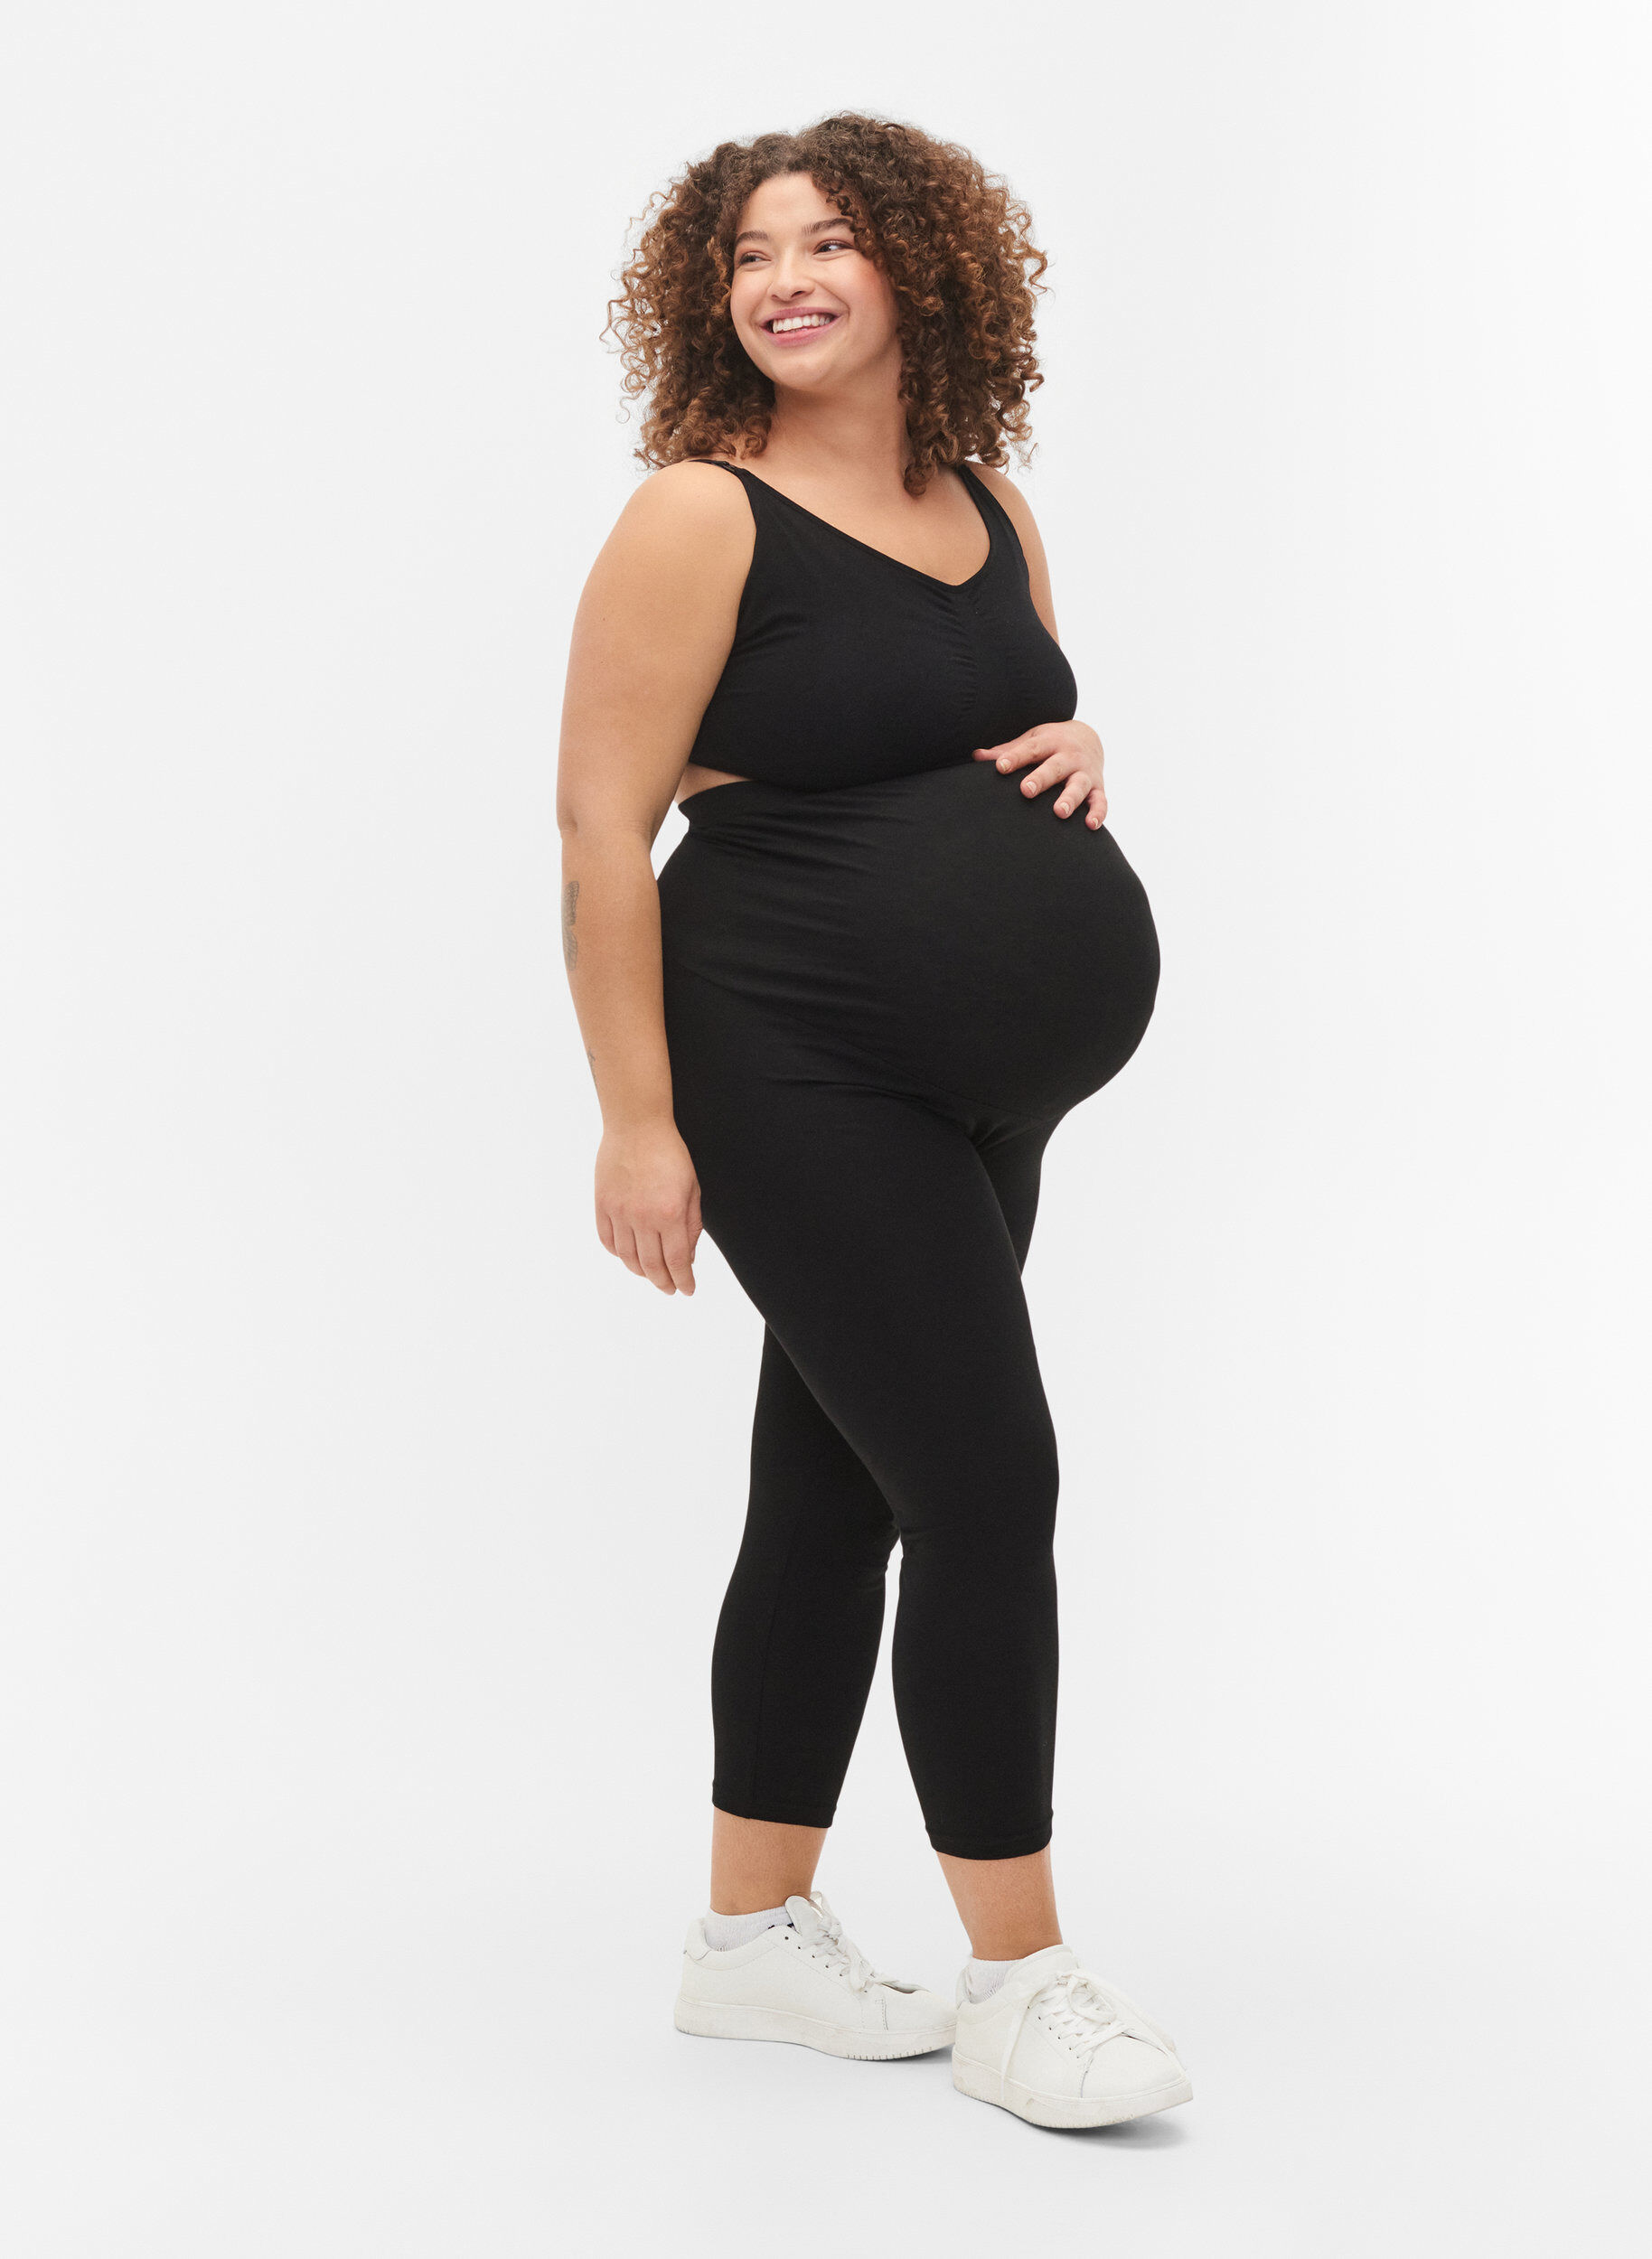 Liberty Pregnancy Leggings l Best Quality Maternity Basics & Essentials